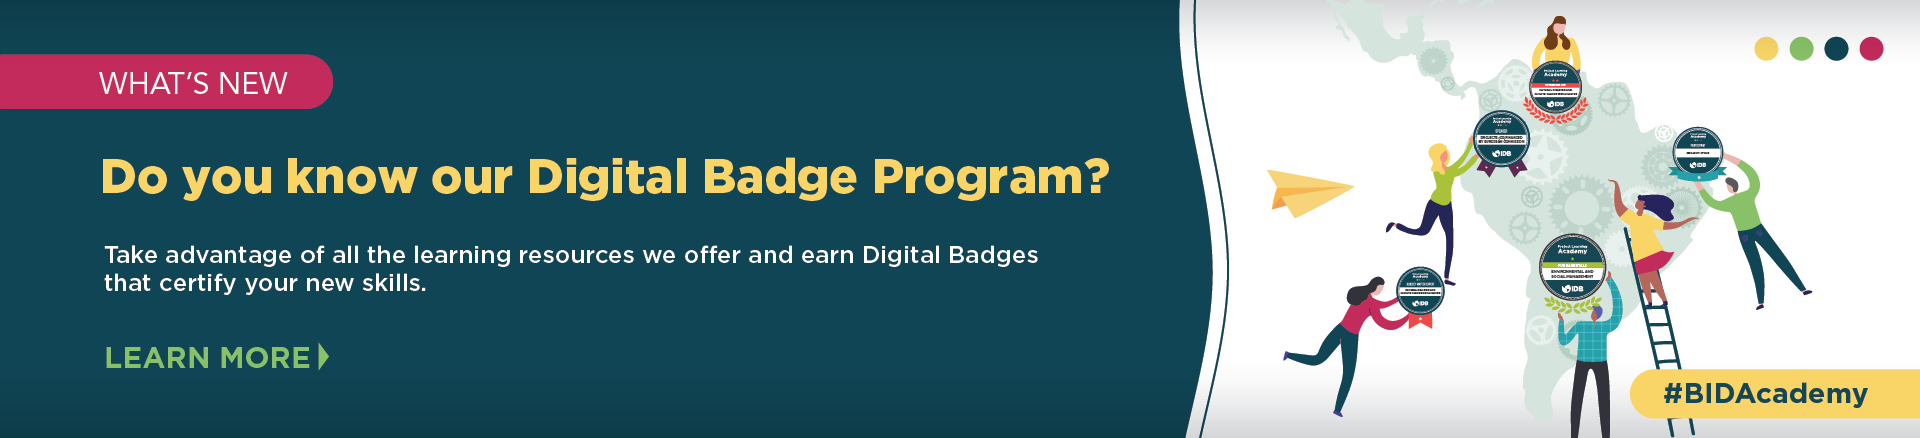 Digital Badge Program